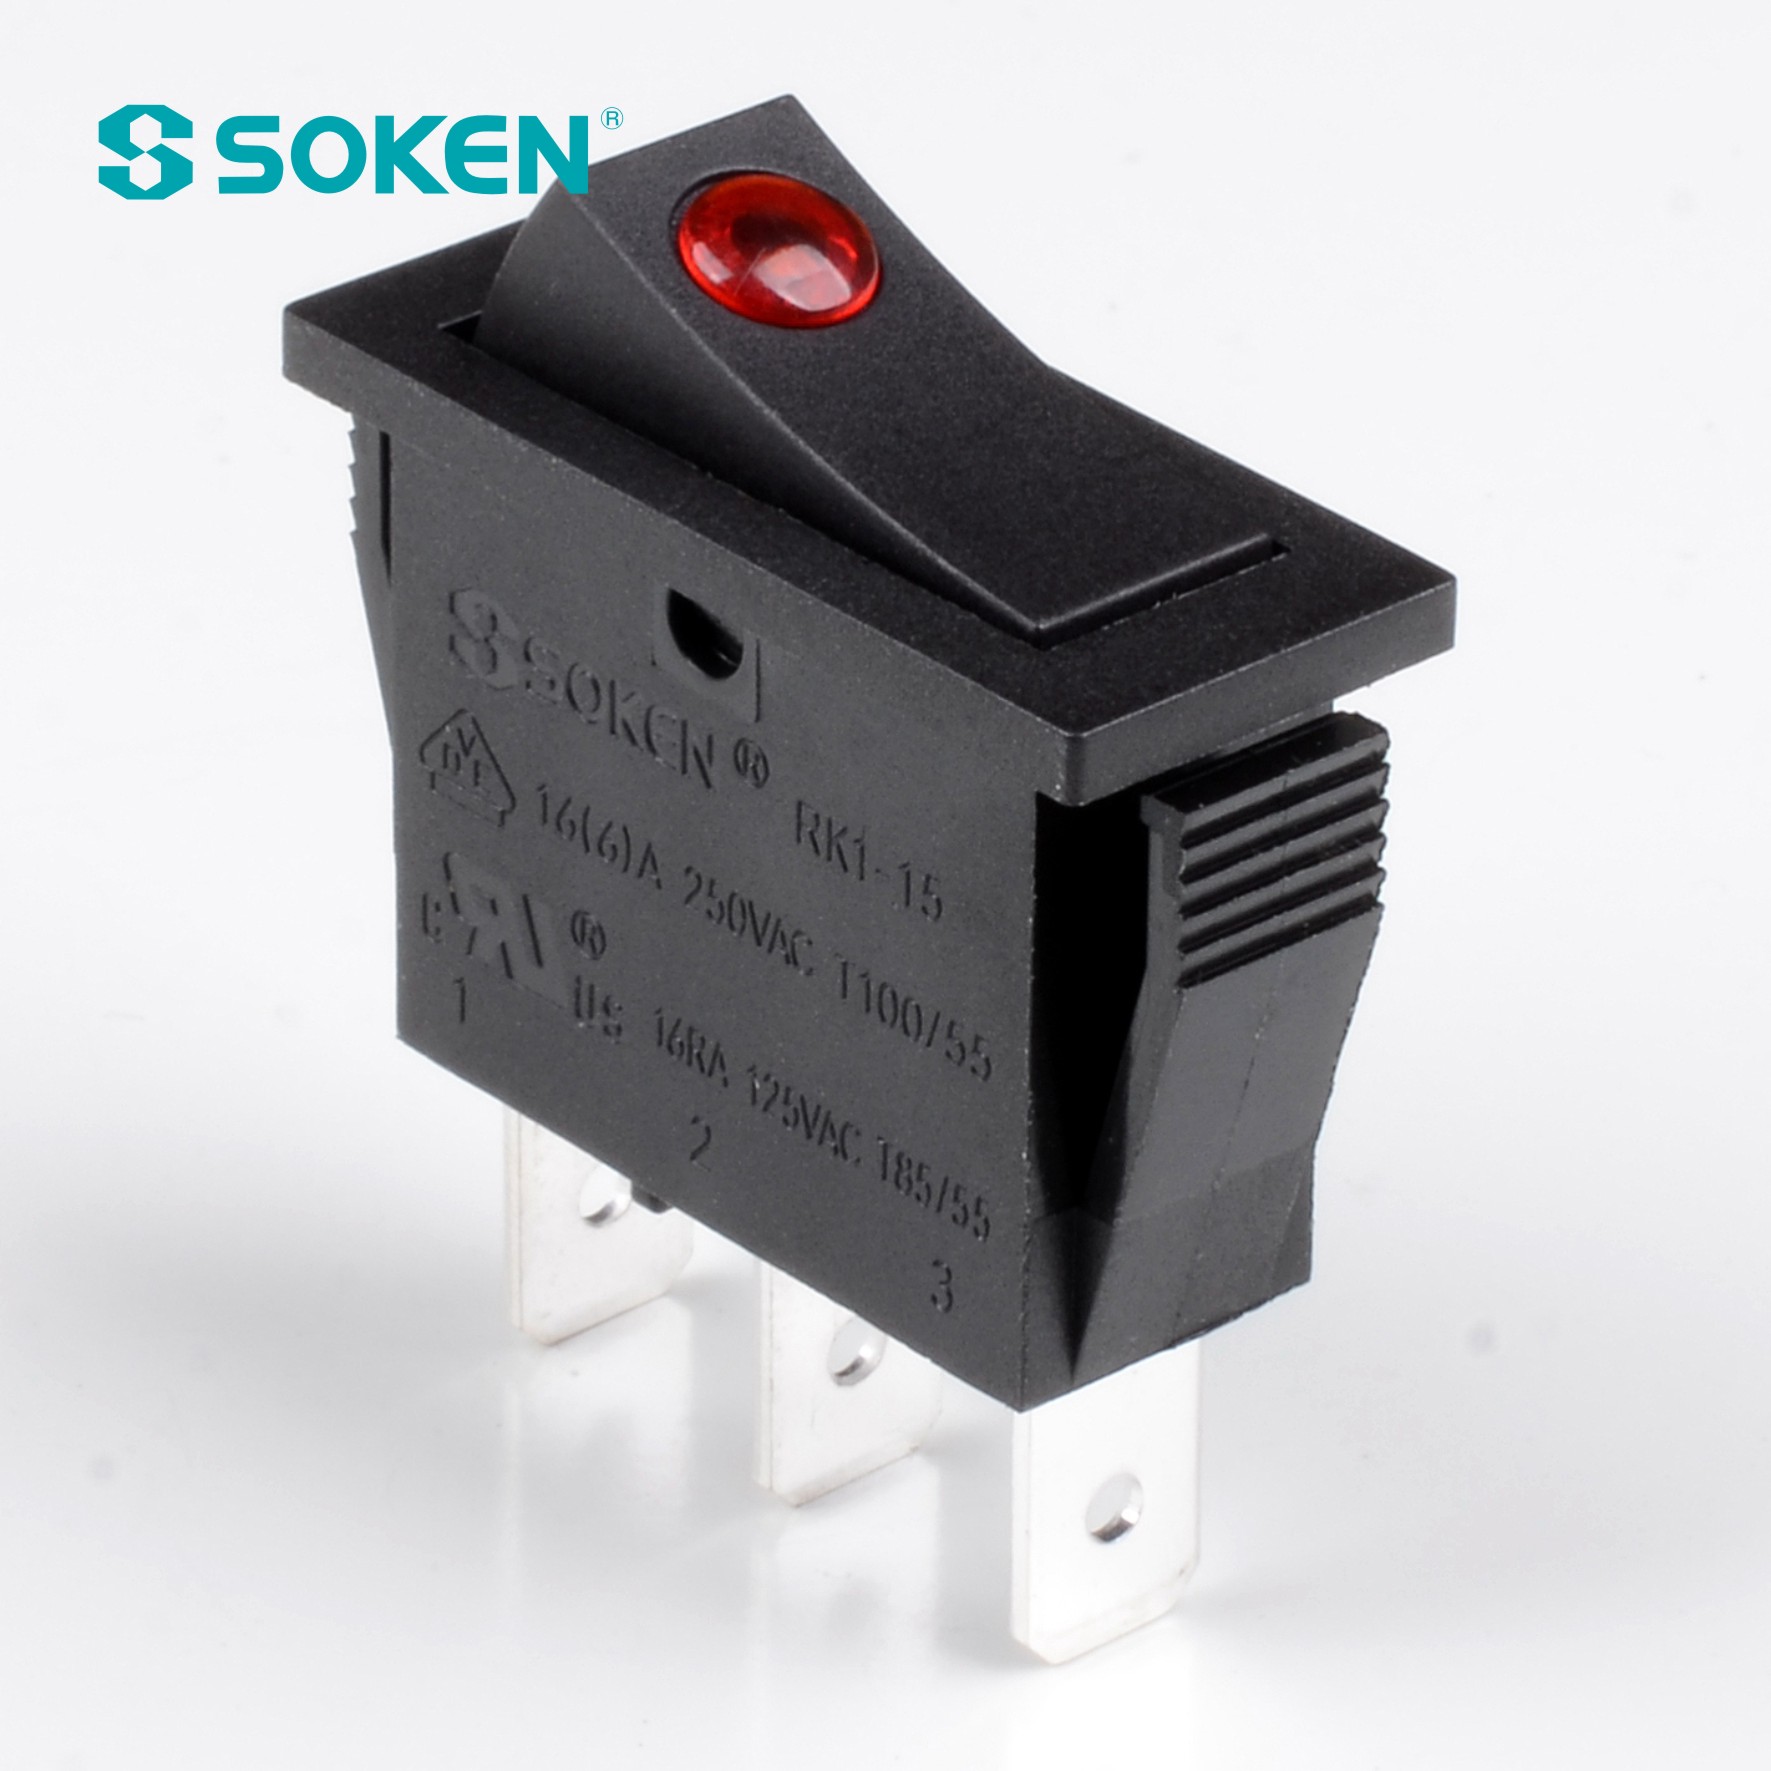 Objectif Soken Rk1-15 1X1n interrupteur à bascule marche/arrêt